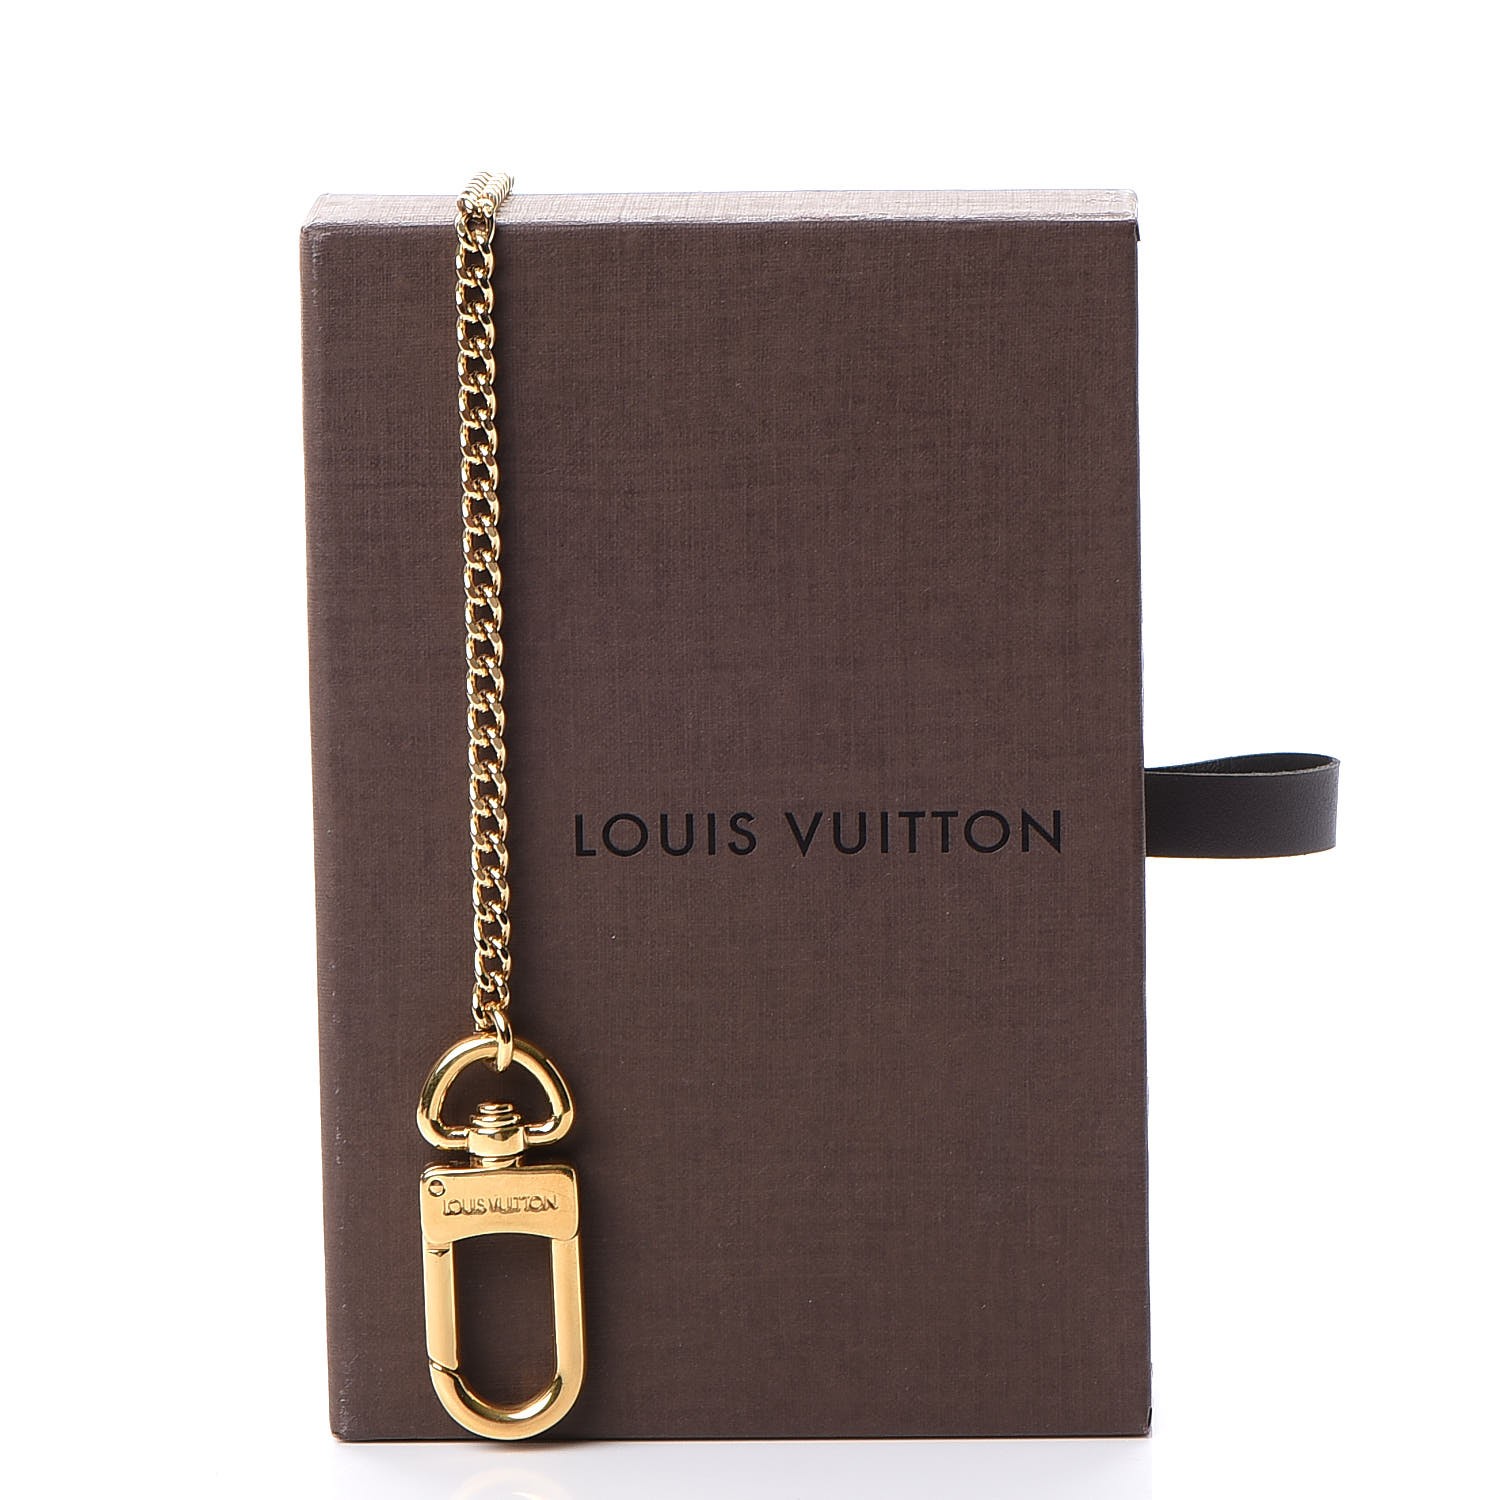 LOUIS VUITTON Pochette Extender Key Ring Chain Gold 259056